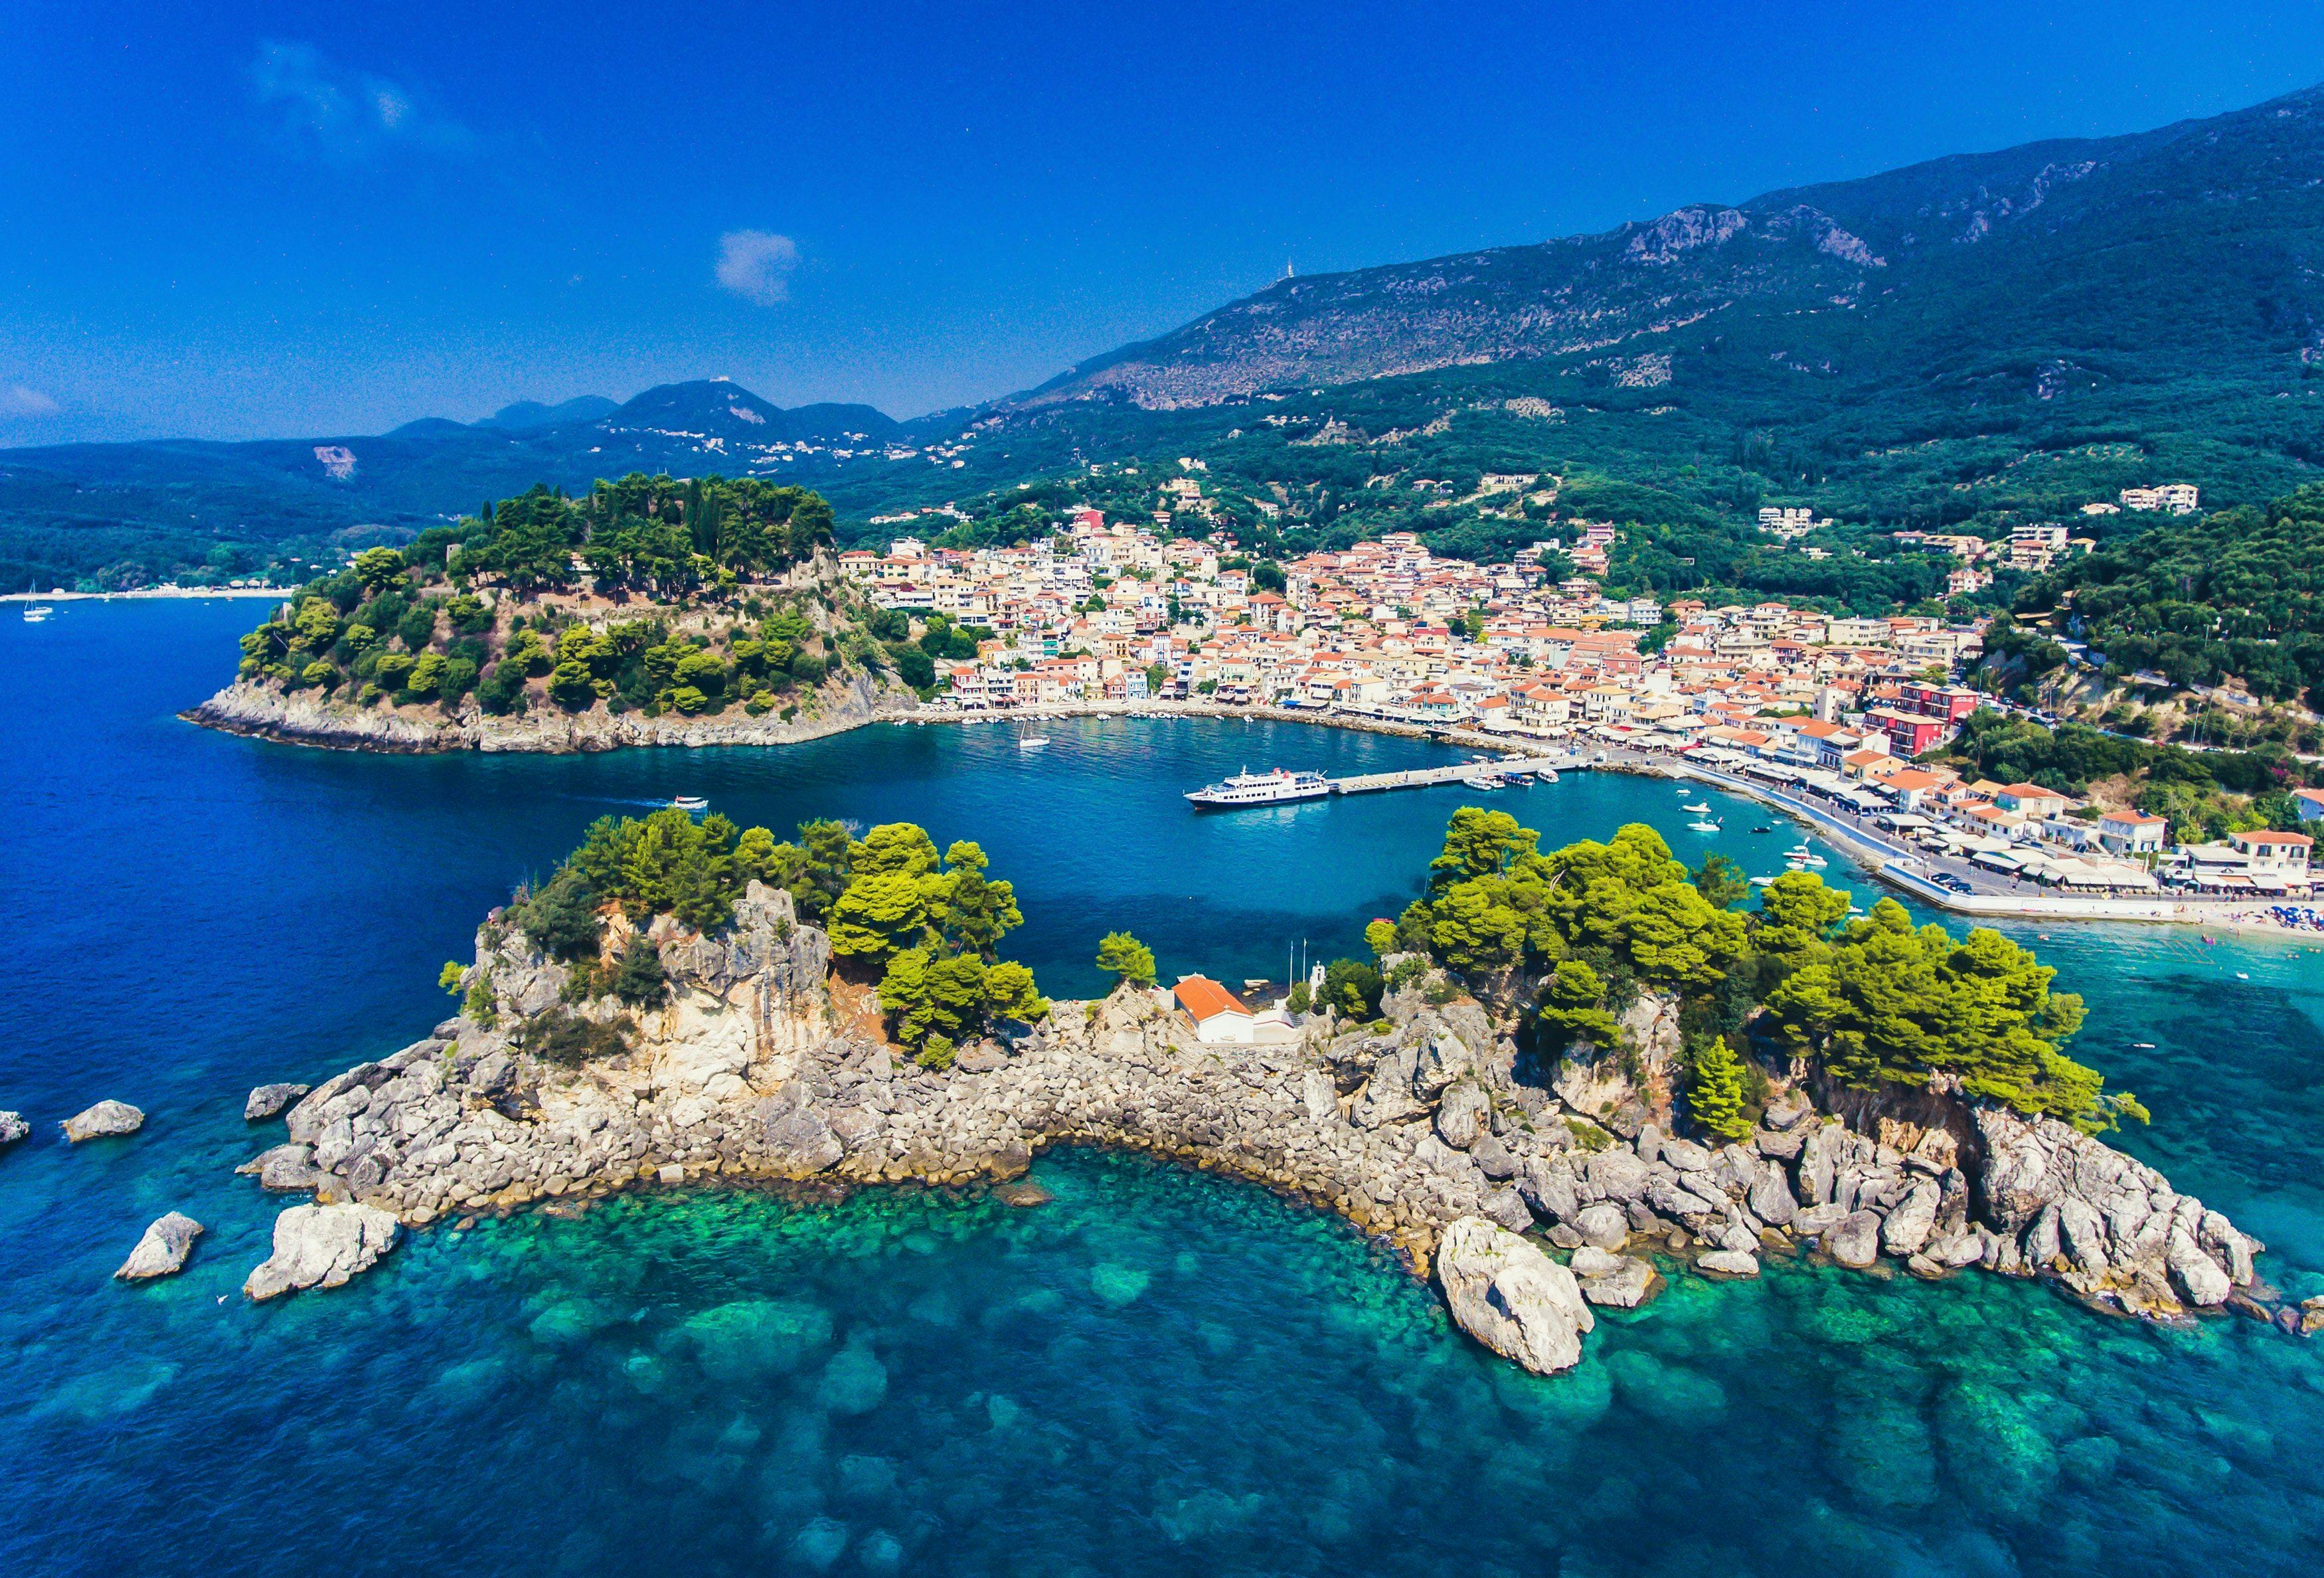 Rocky coastline with blue Mediterranean in Greece